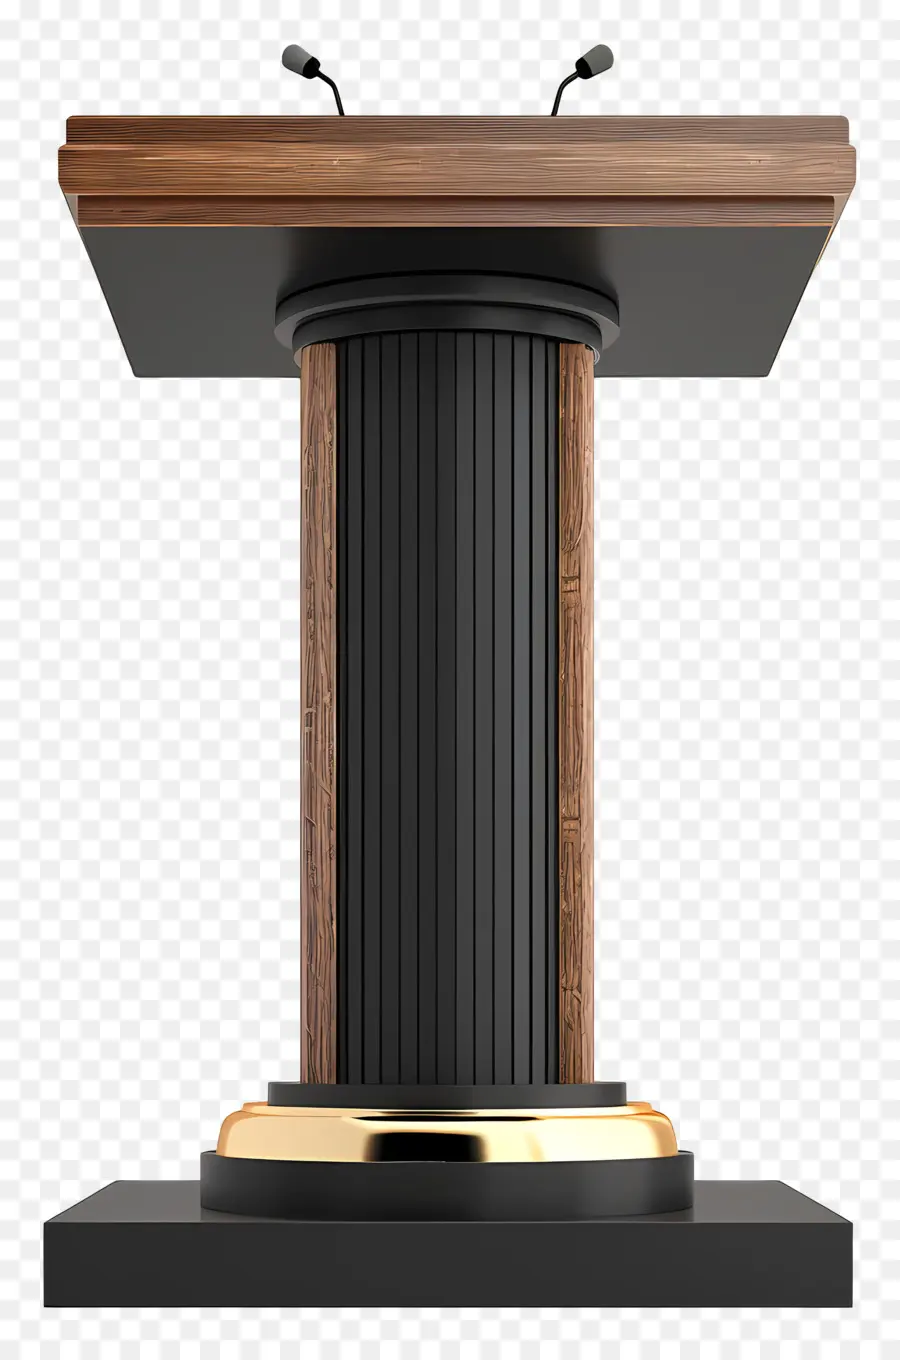 Sprachpodiumspodium -Podium -Gold -Trimmmikrofon -Microfon -Oberfläche glatte Oberfläche - Holzpodium mit Goldverkleidung, Mikrofonständer